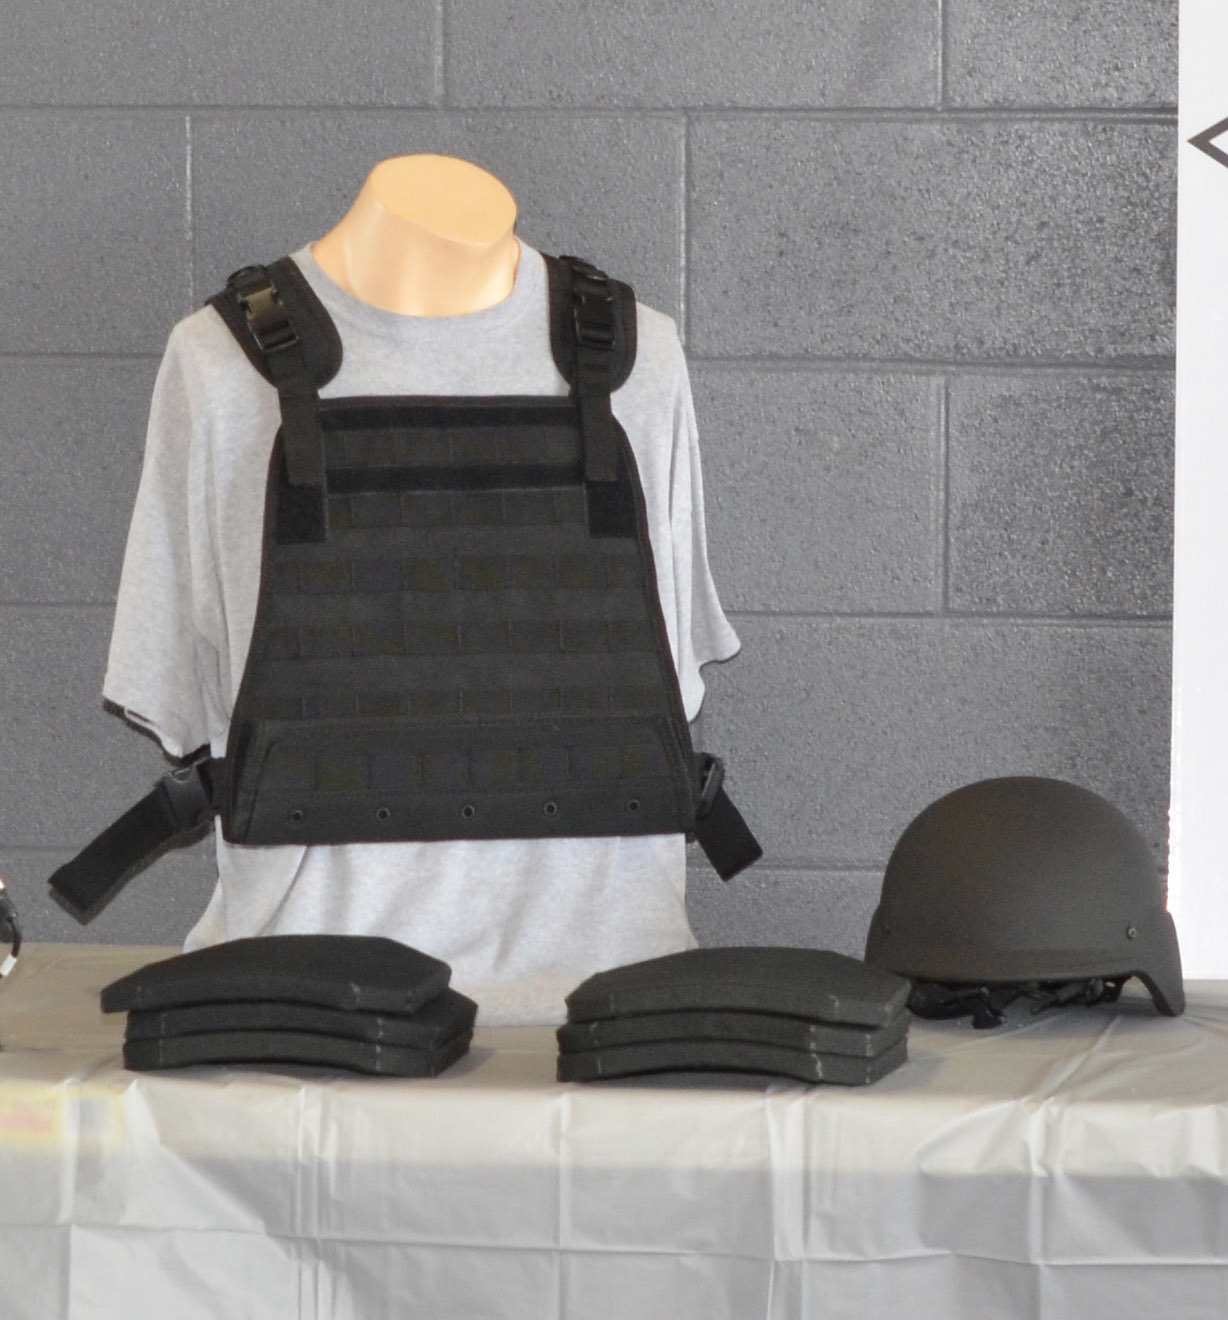 Each active-shooter kit includes six Level IV ballistic plates, a plate carrier vest and a ballistic helmet.